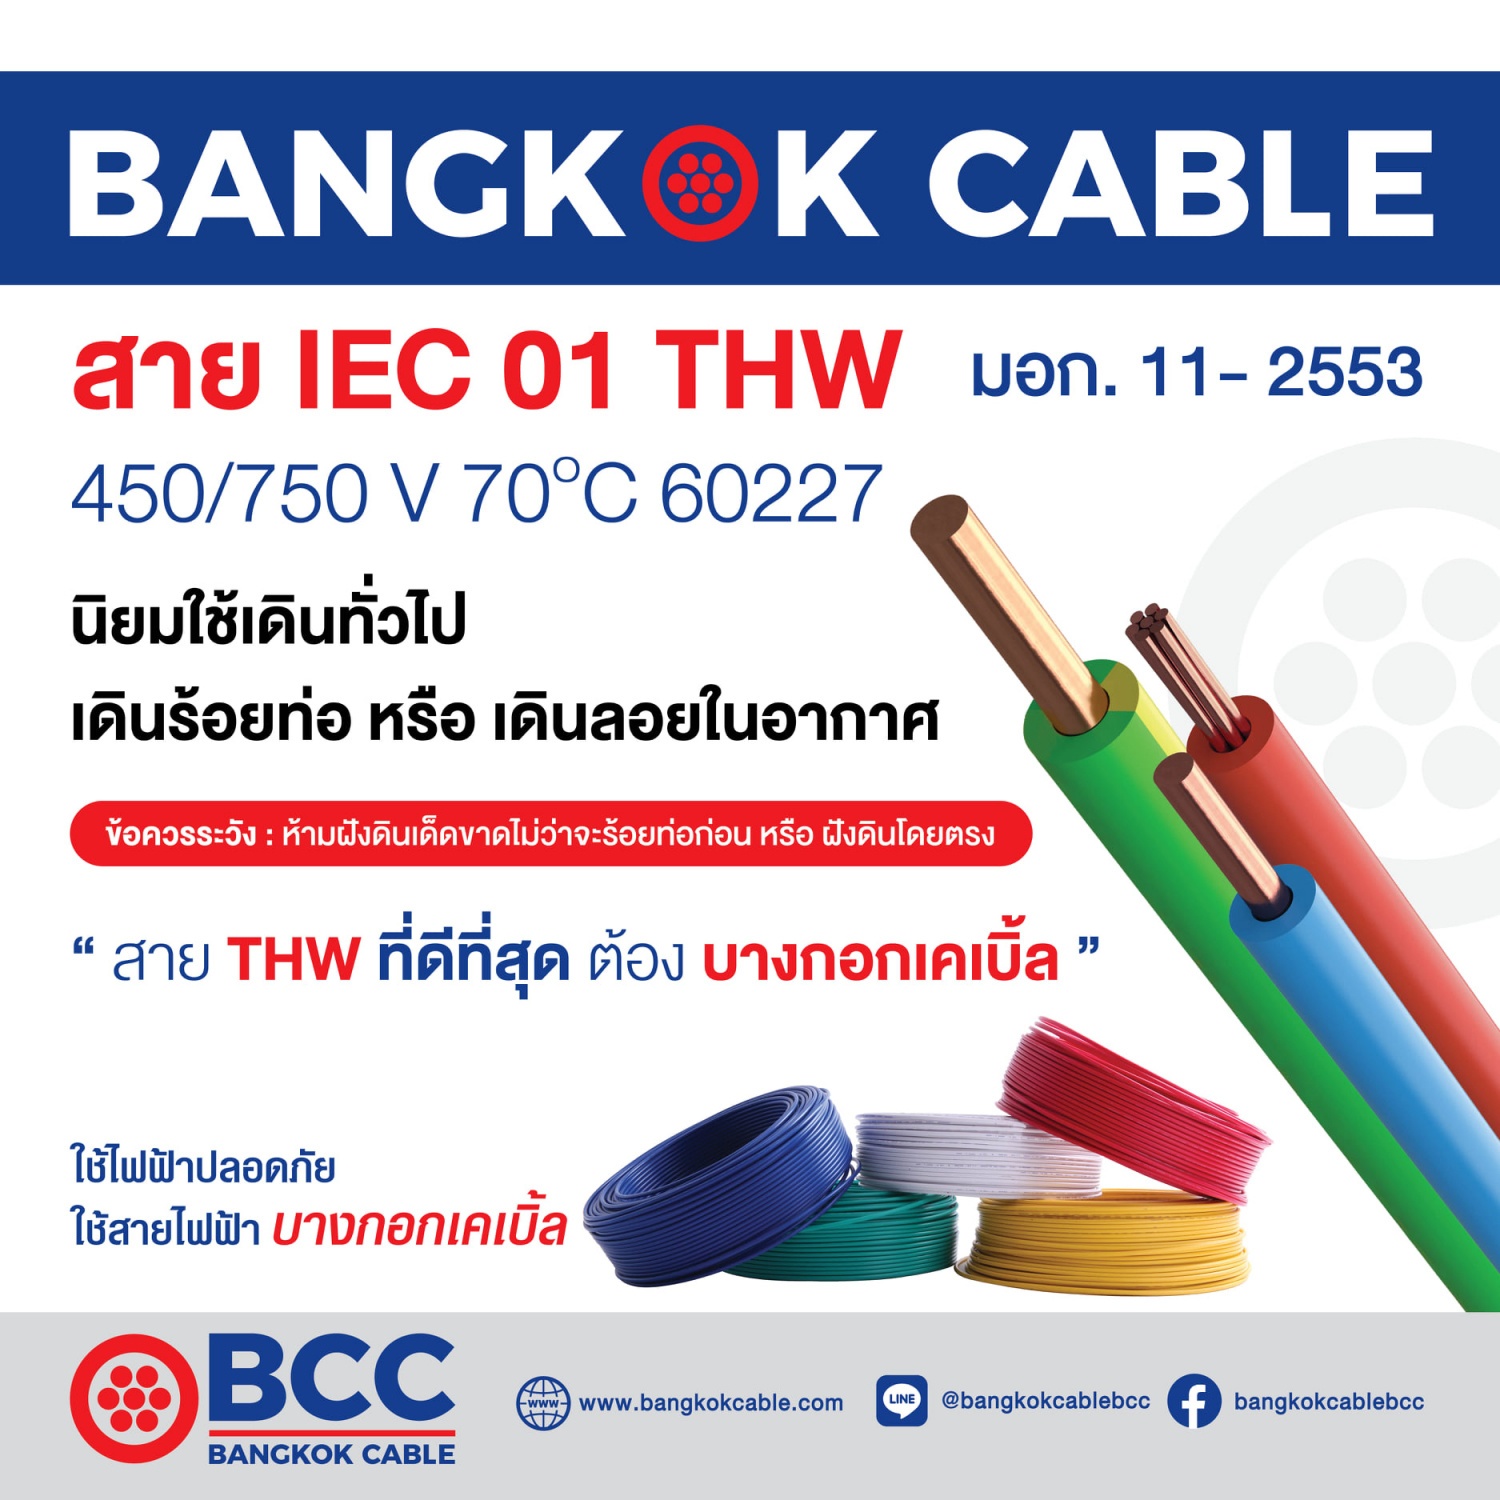 BCC สายไฟ IEC01 THW 1x10 SQ.MM. 100ม. สีน้ำตาล